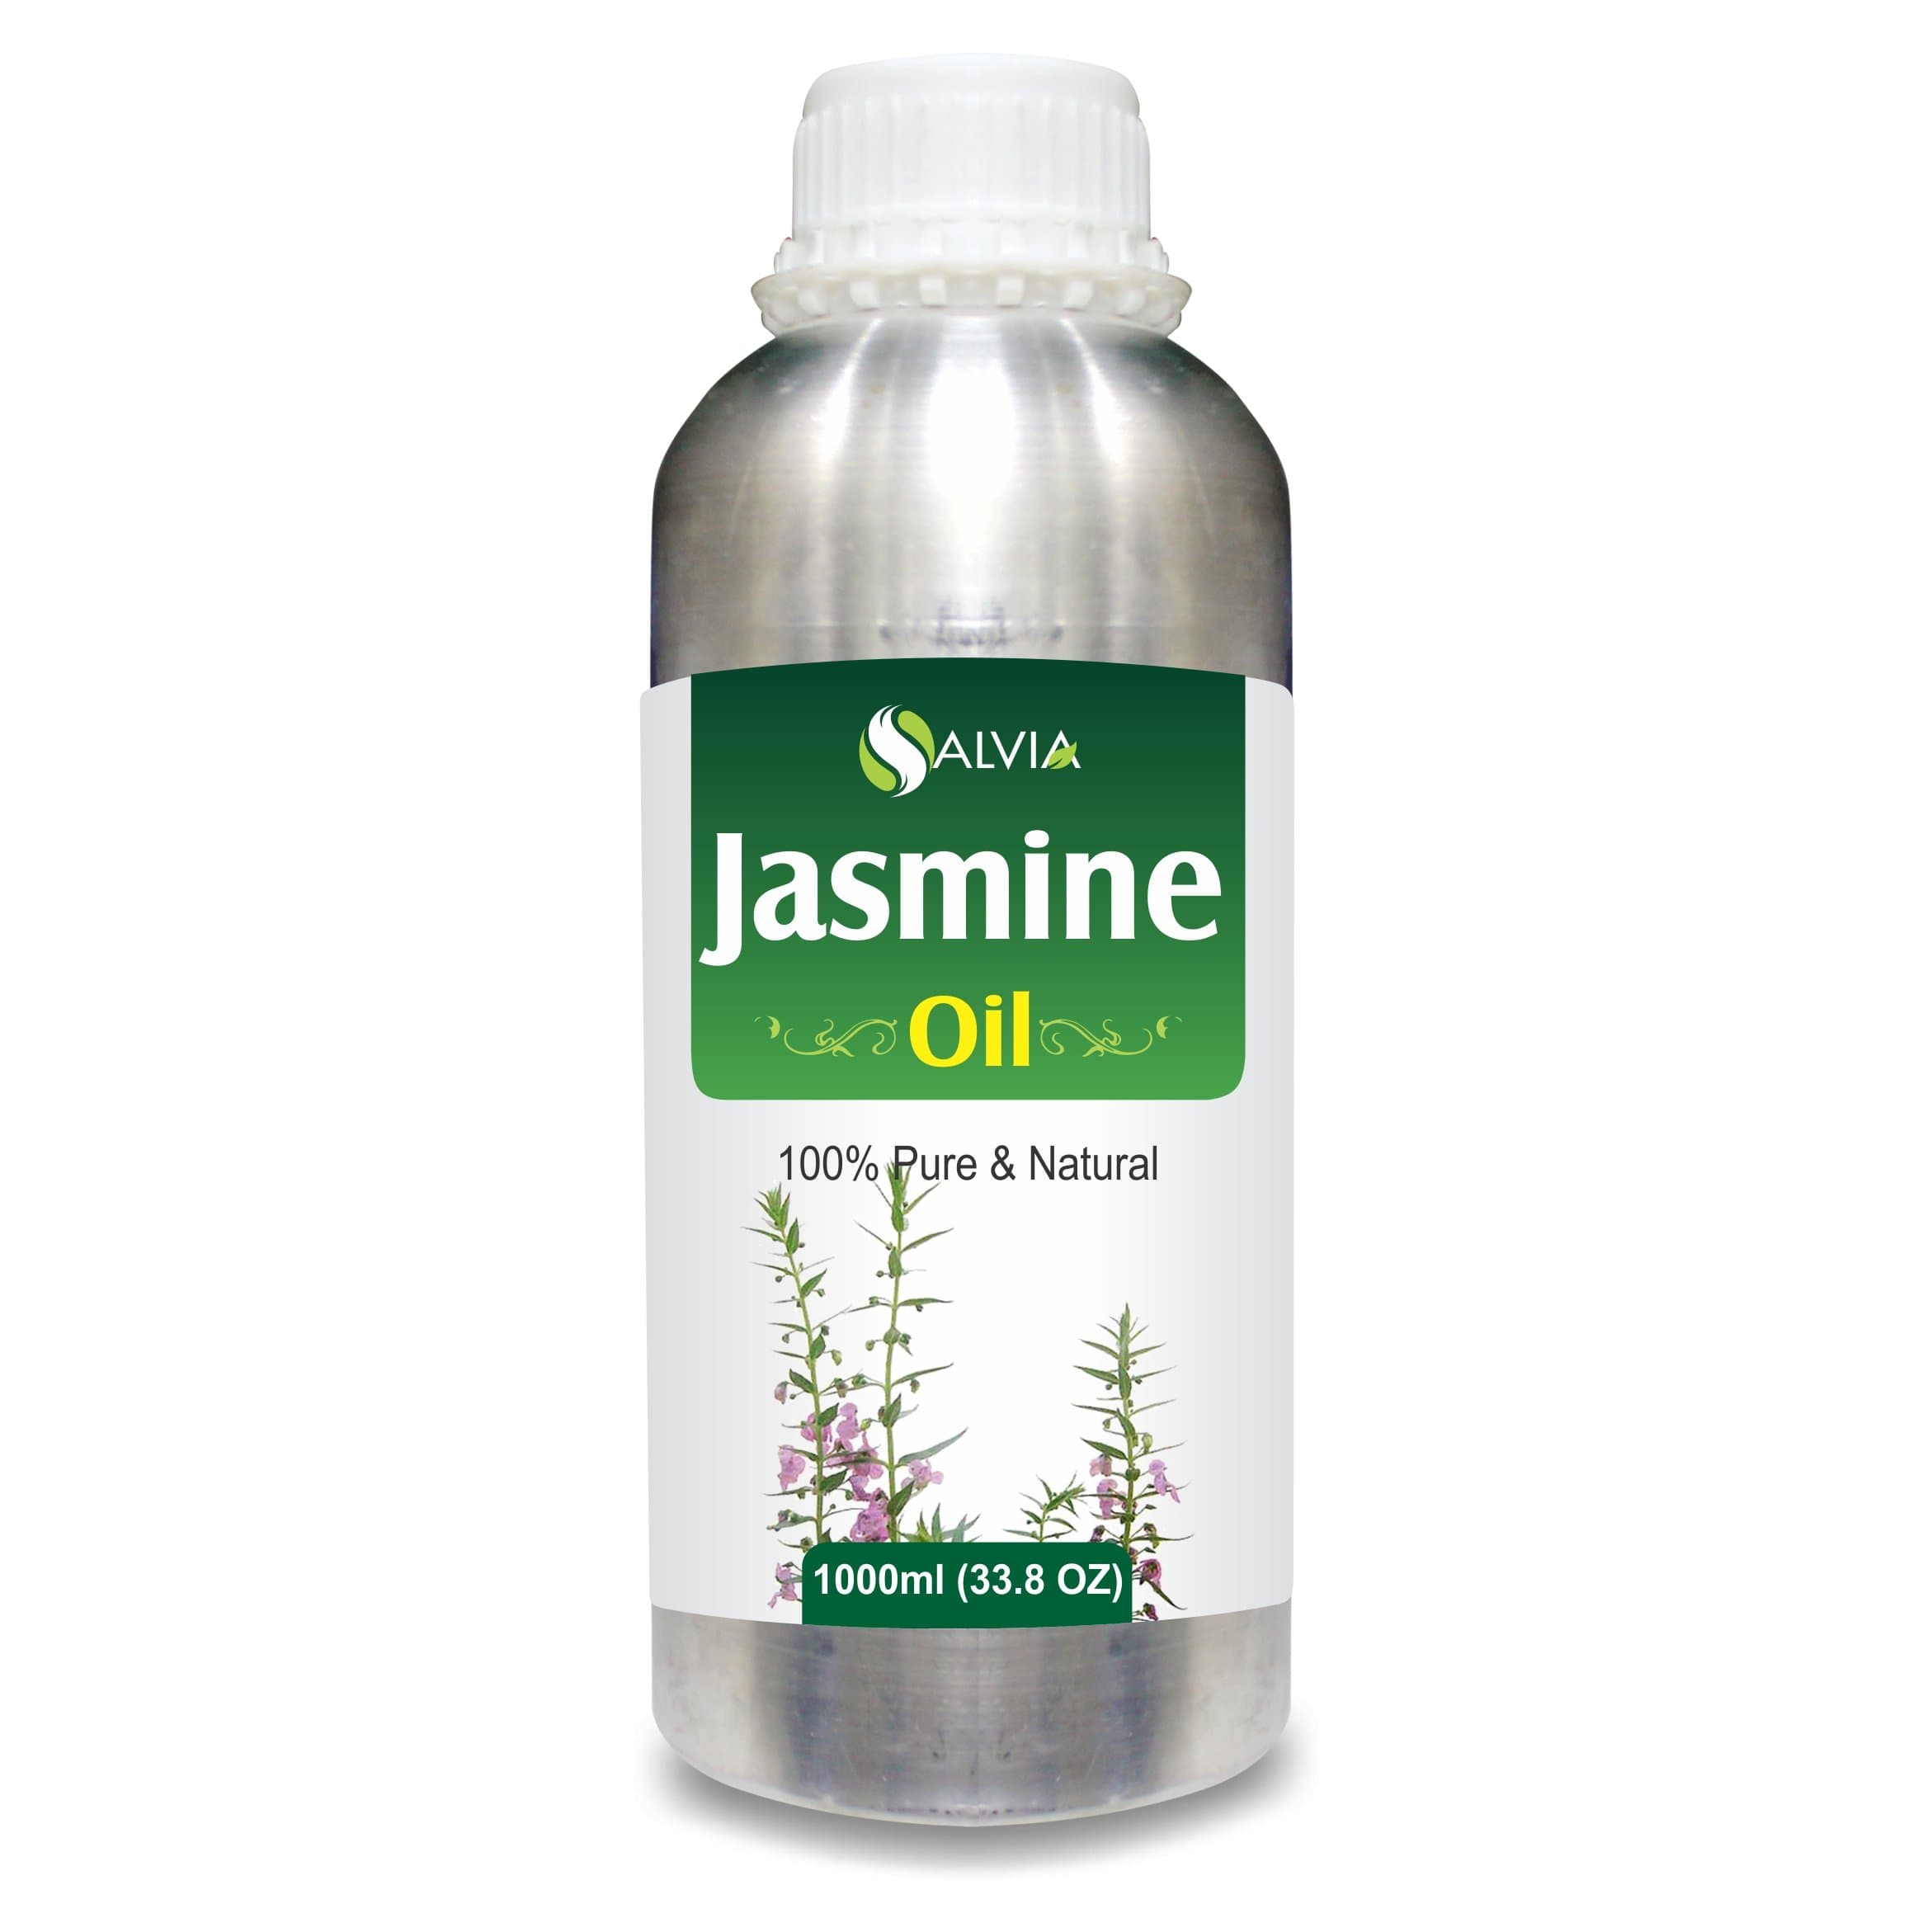 jasmine essential oil benefits for skin